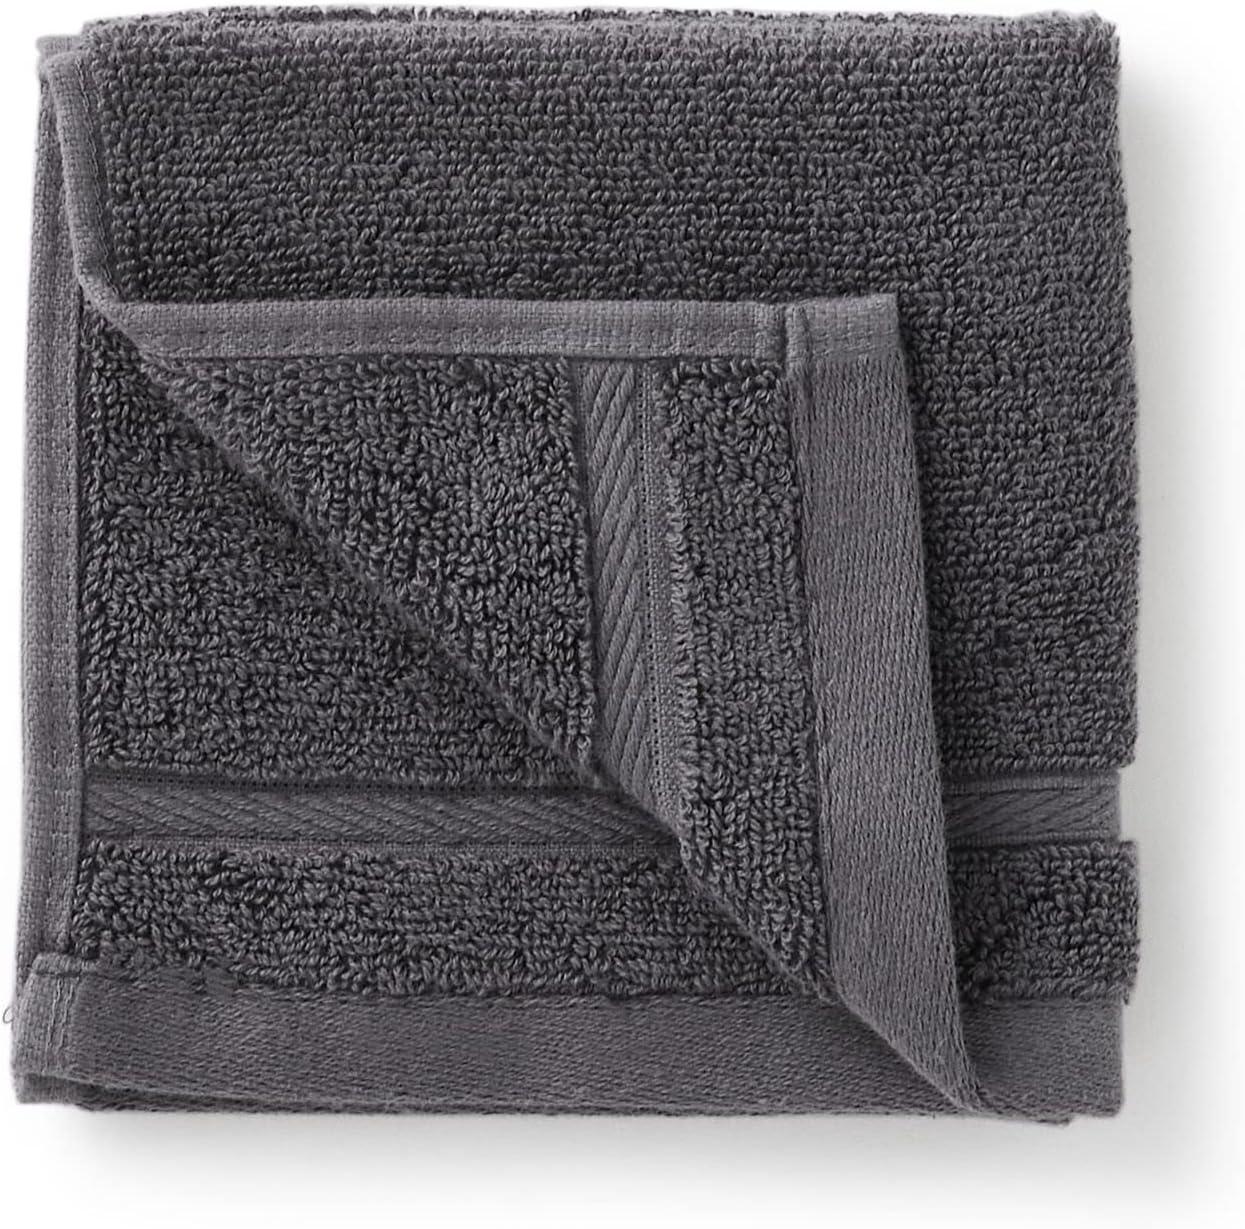 Basics Cotton Washcloths, Made with 30% Recycled Cotton Content -  12-Pack, Dark Gray Dark Grey Washcloths